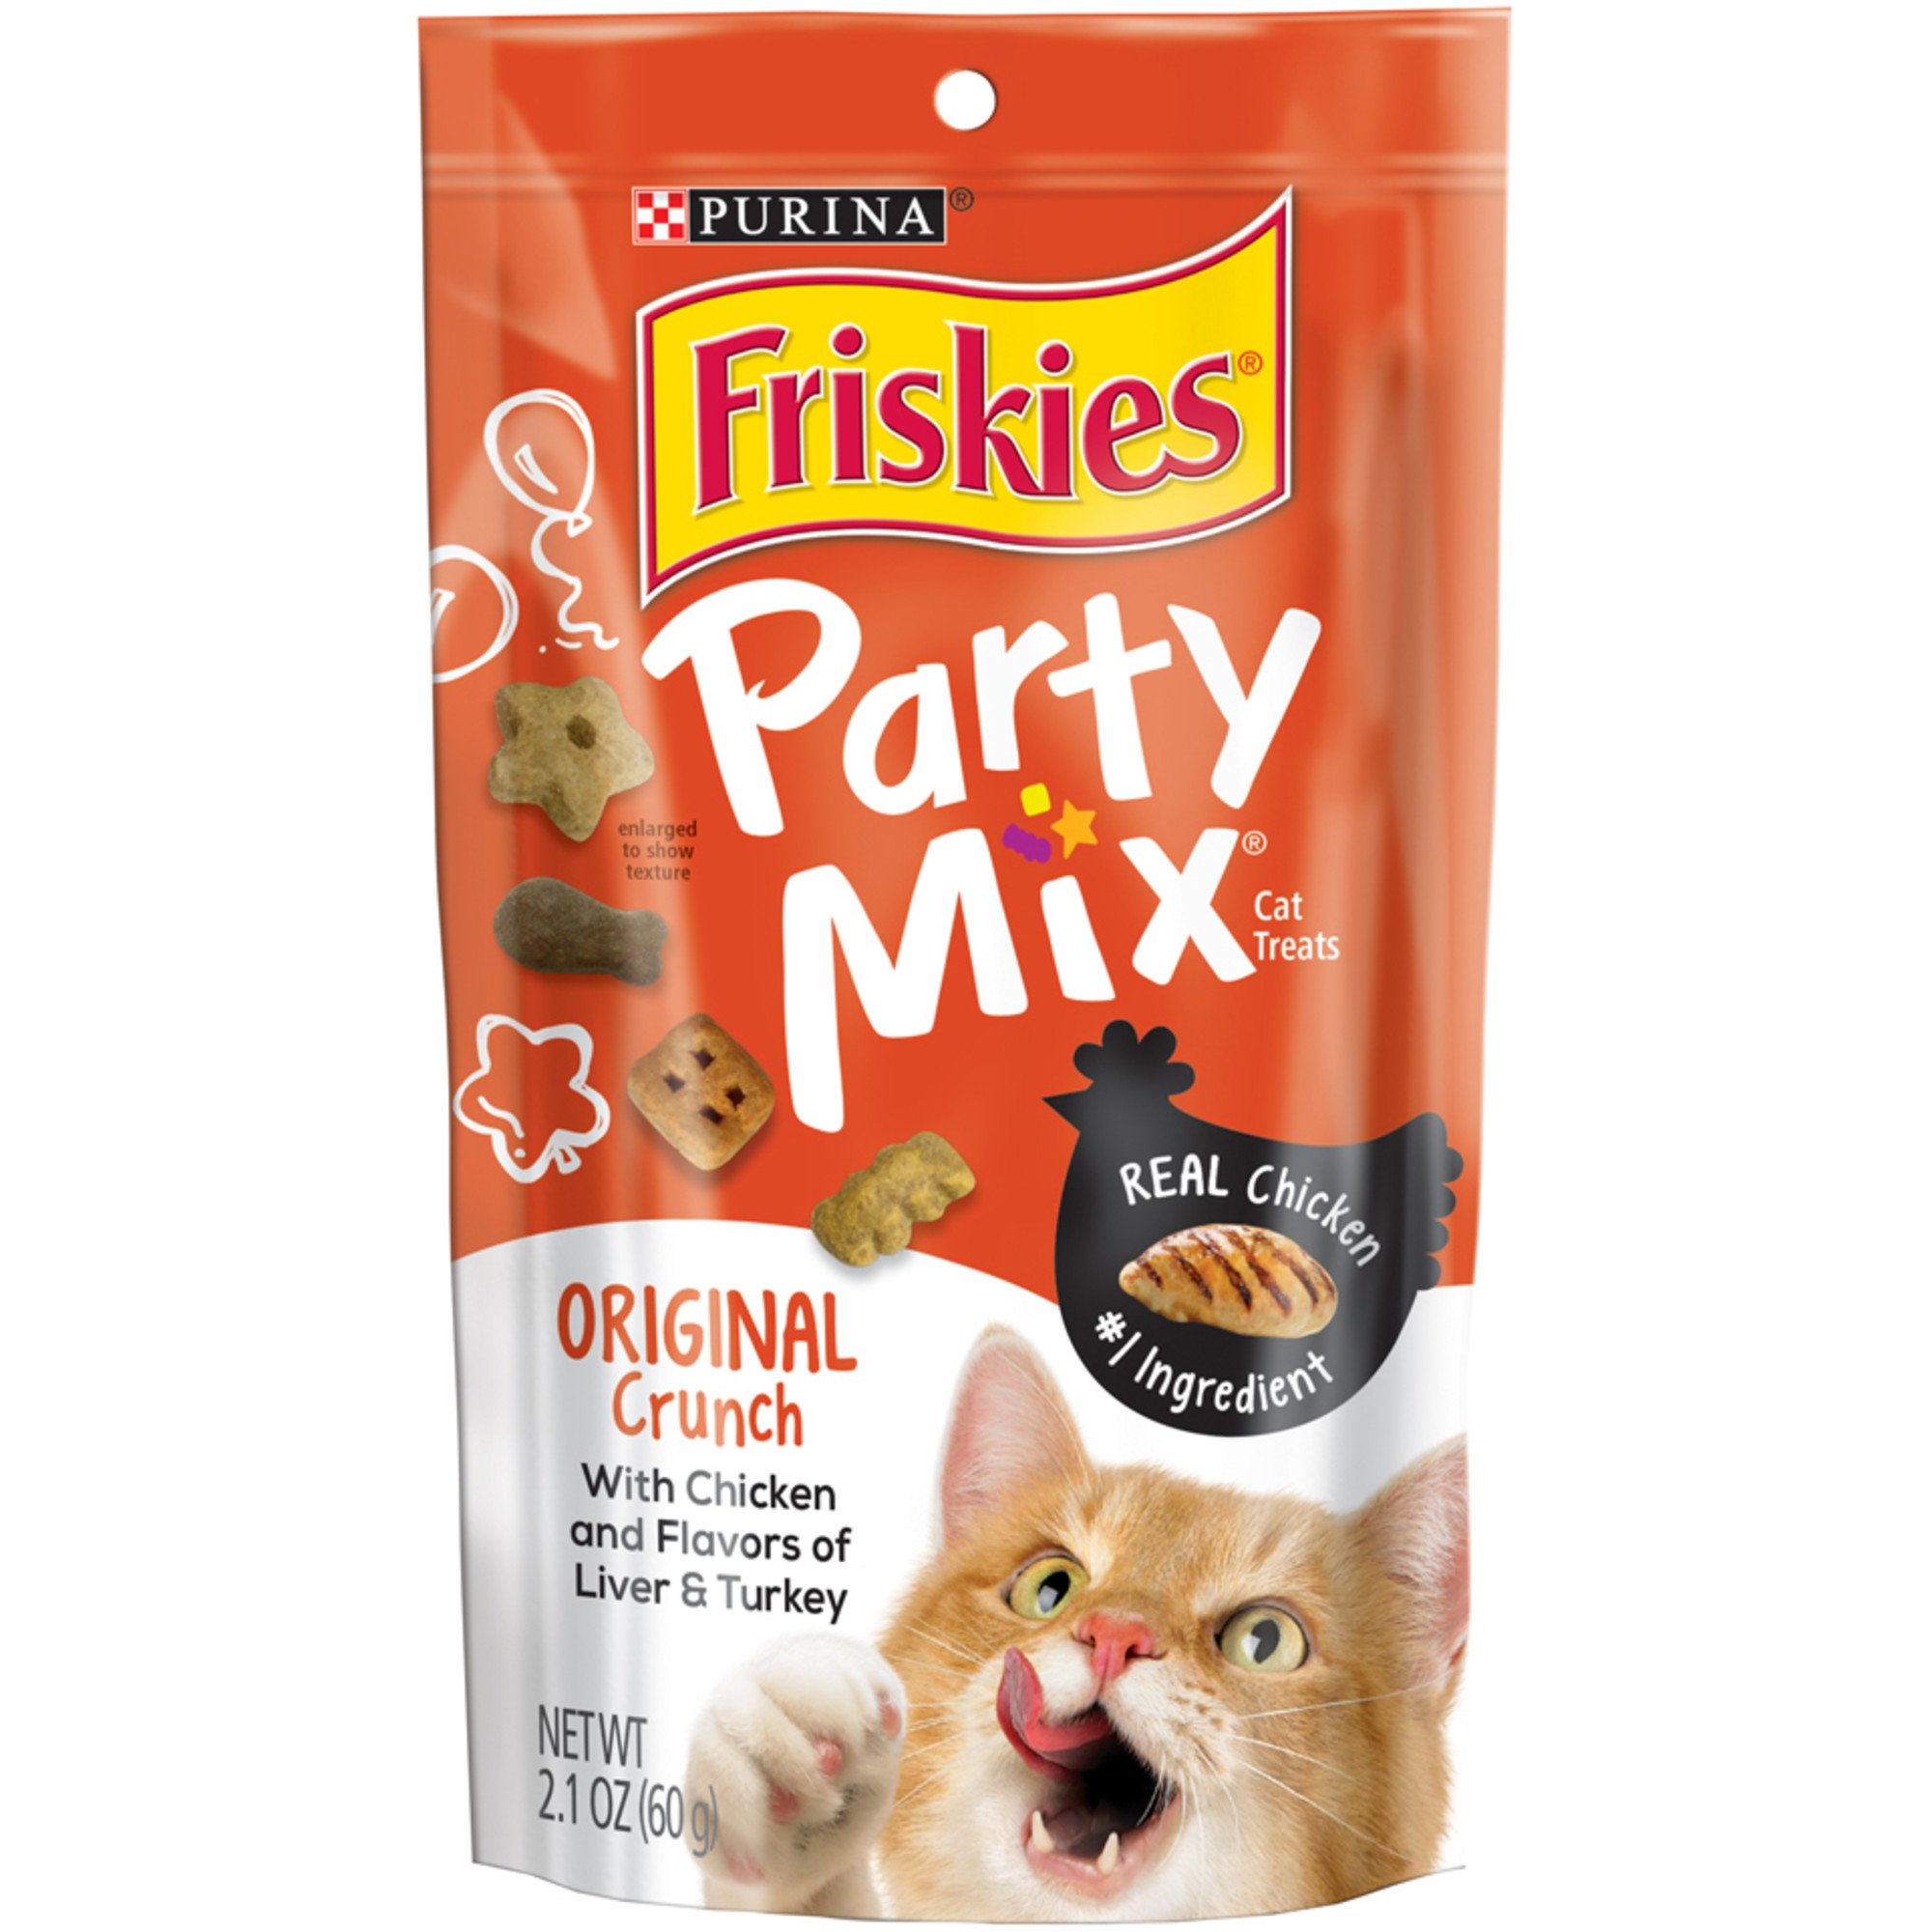 Friskies Original Crunch Party Mix Cat Treats Petco